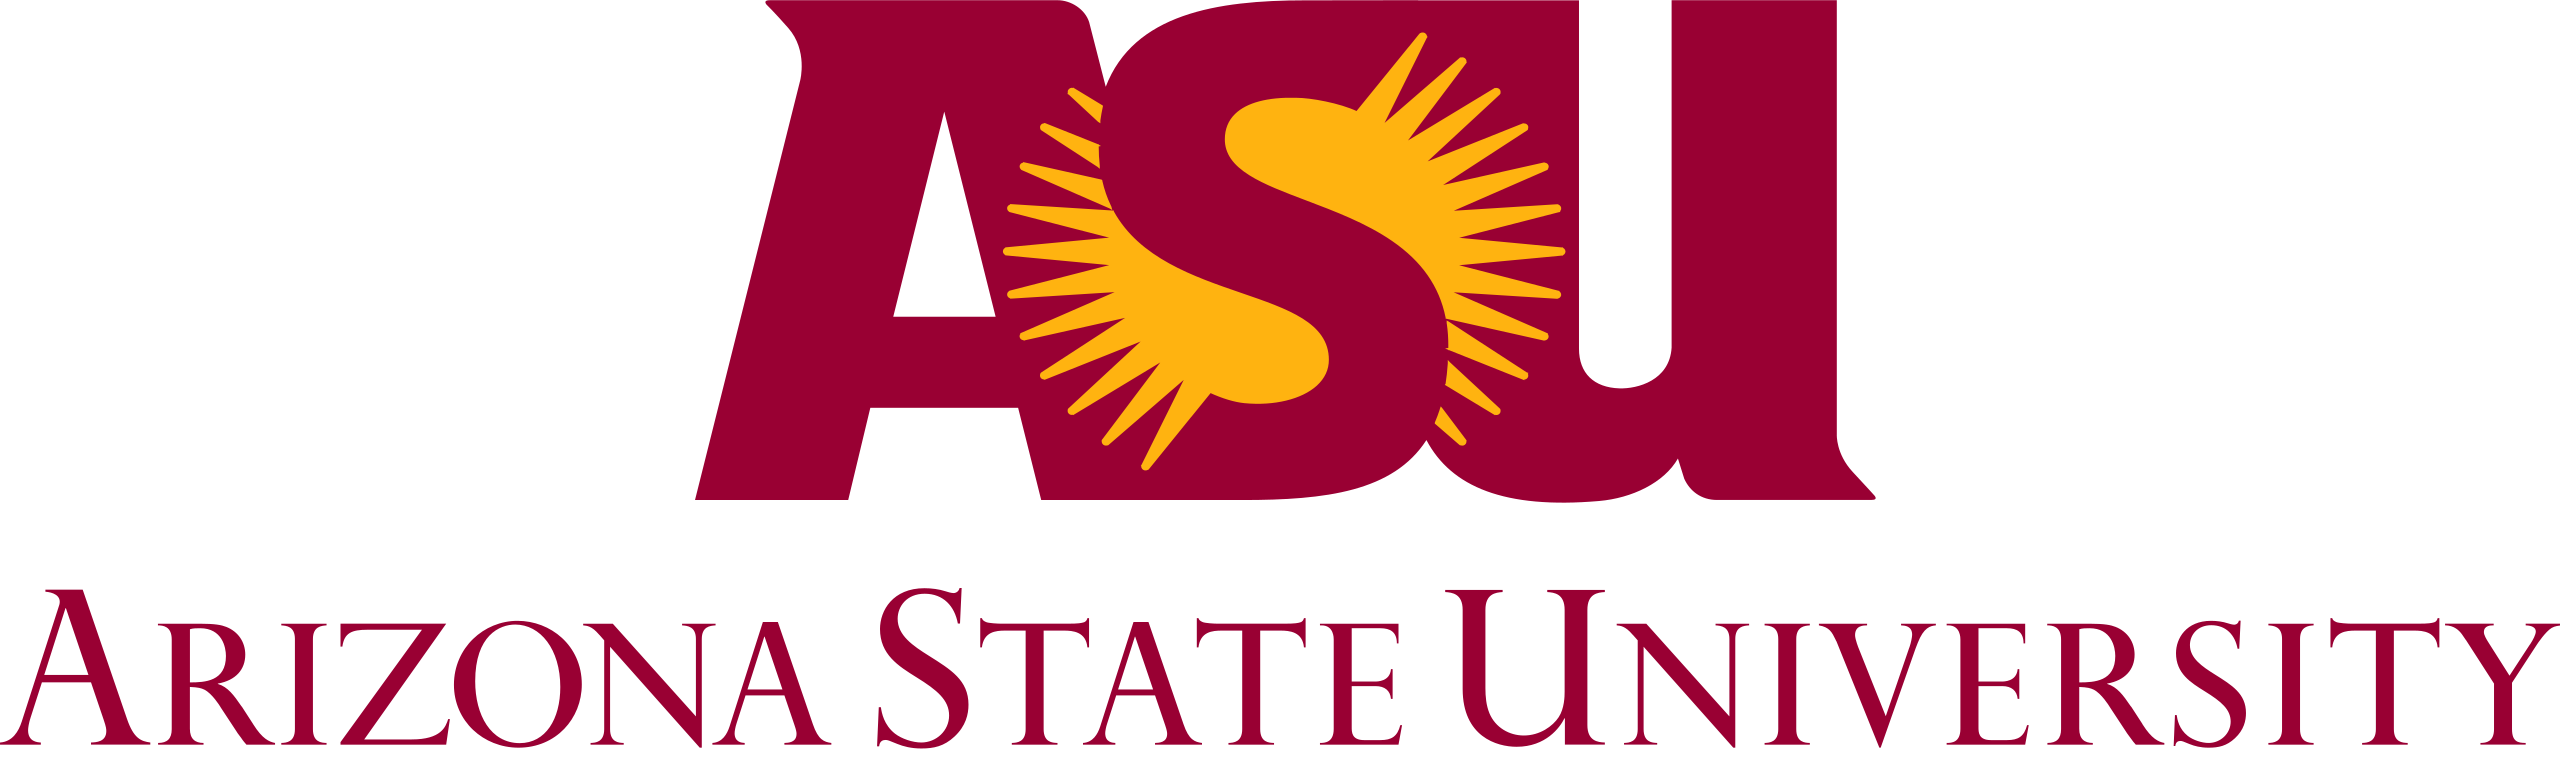 Arizona State University (ASU) Logo PNG Photos